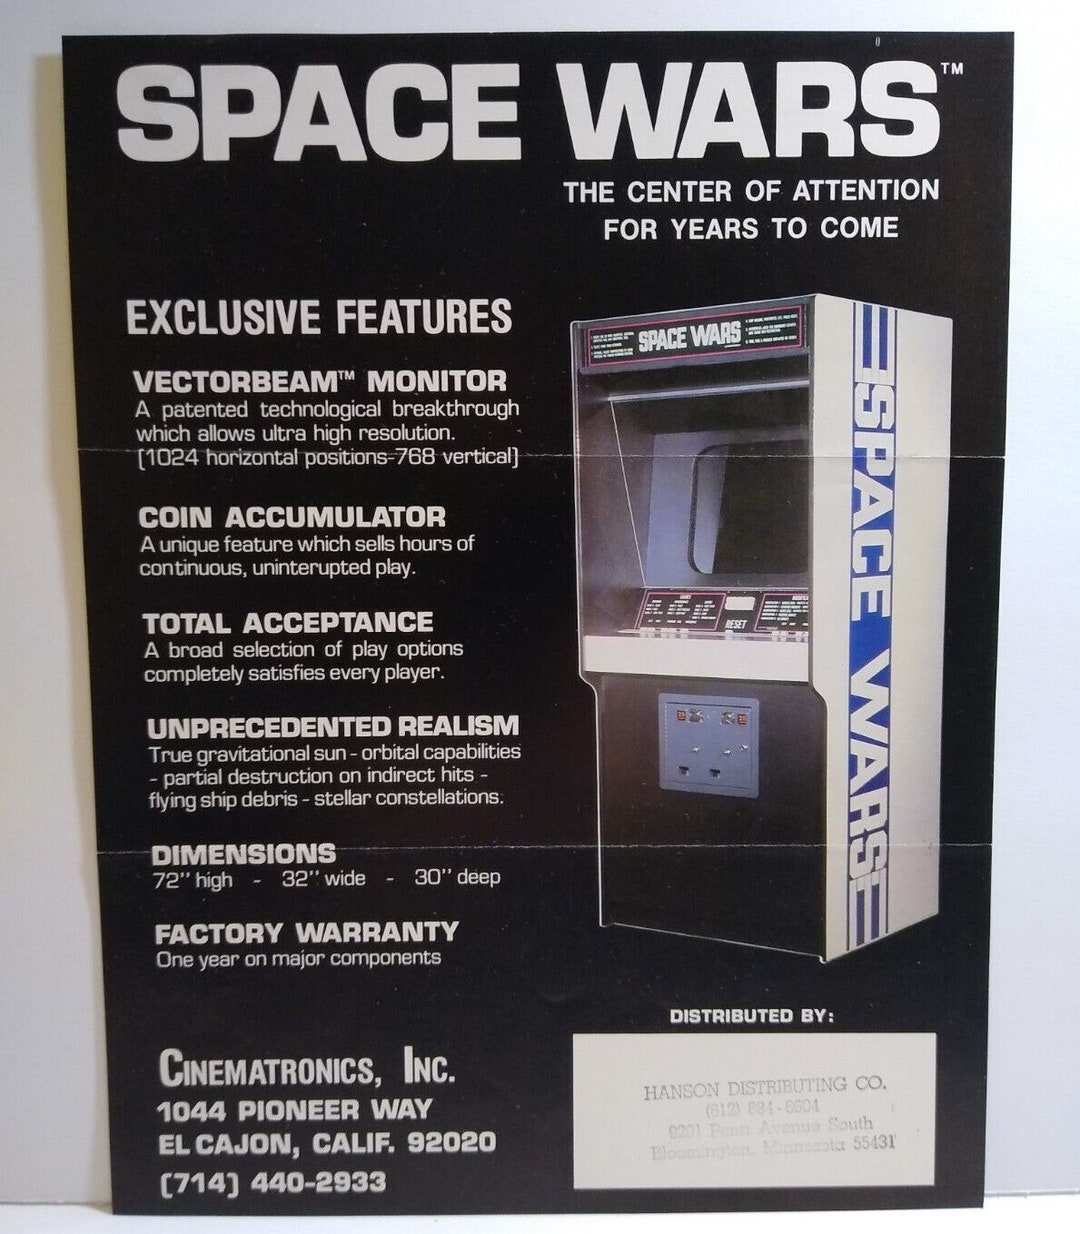 Space Wars and Cinematronics